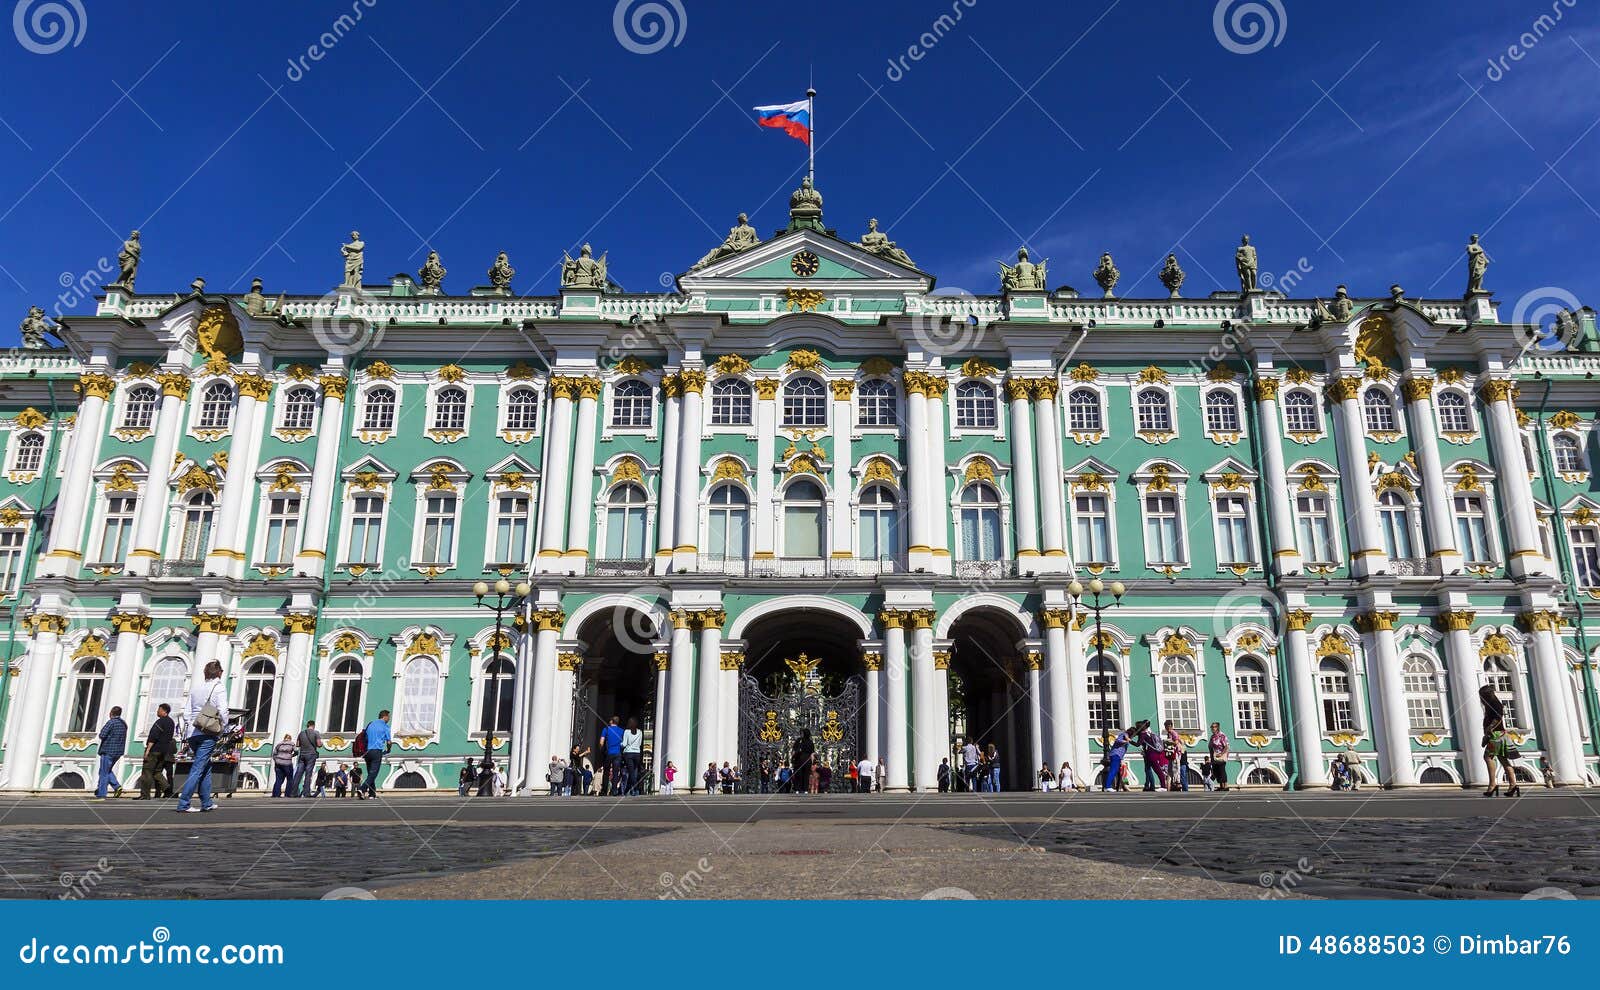 hermitage-palace-square-st-petersburg-russia-48688503.jpg